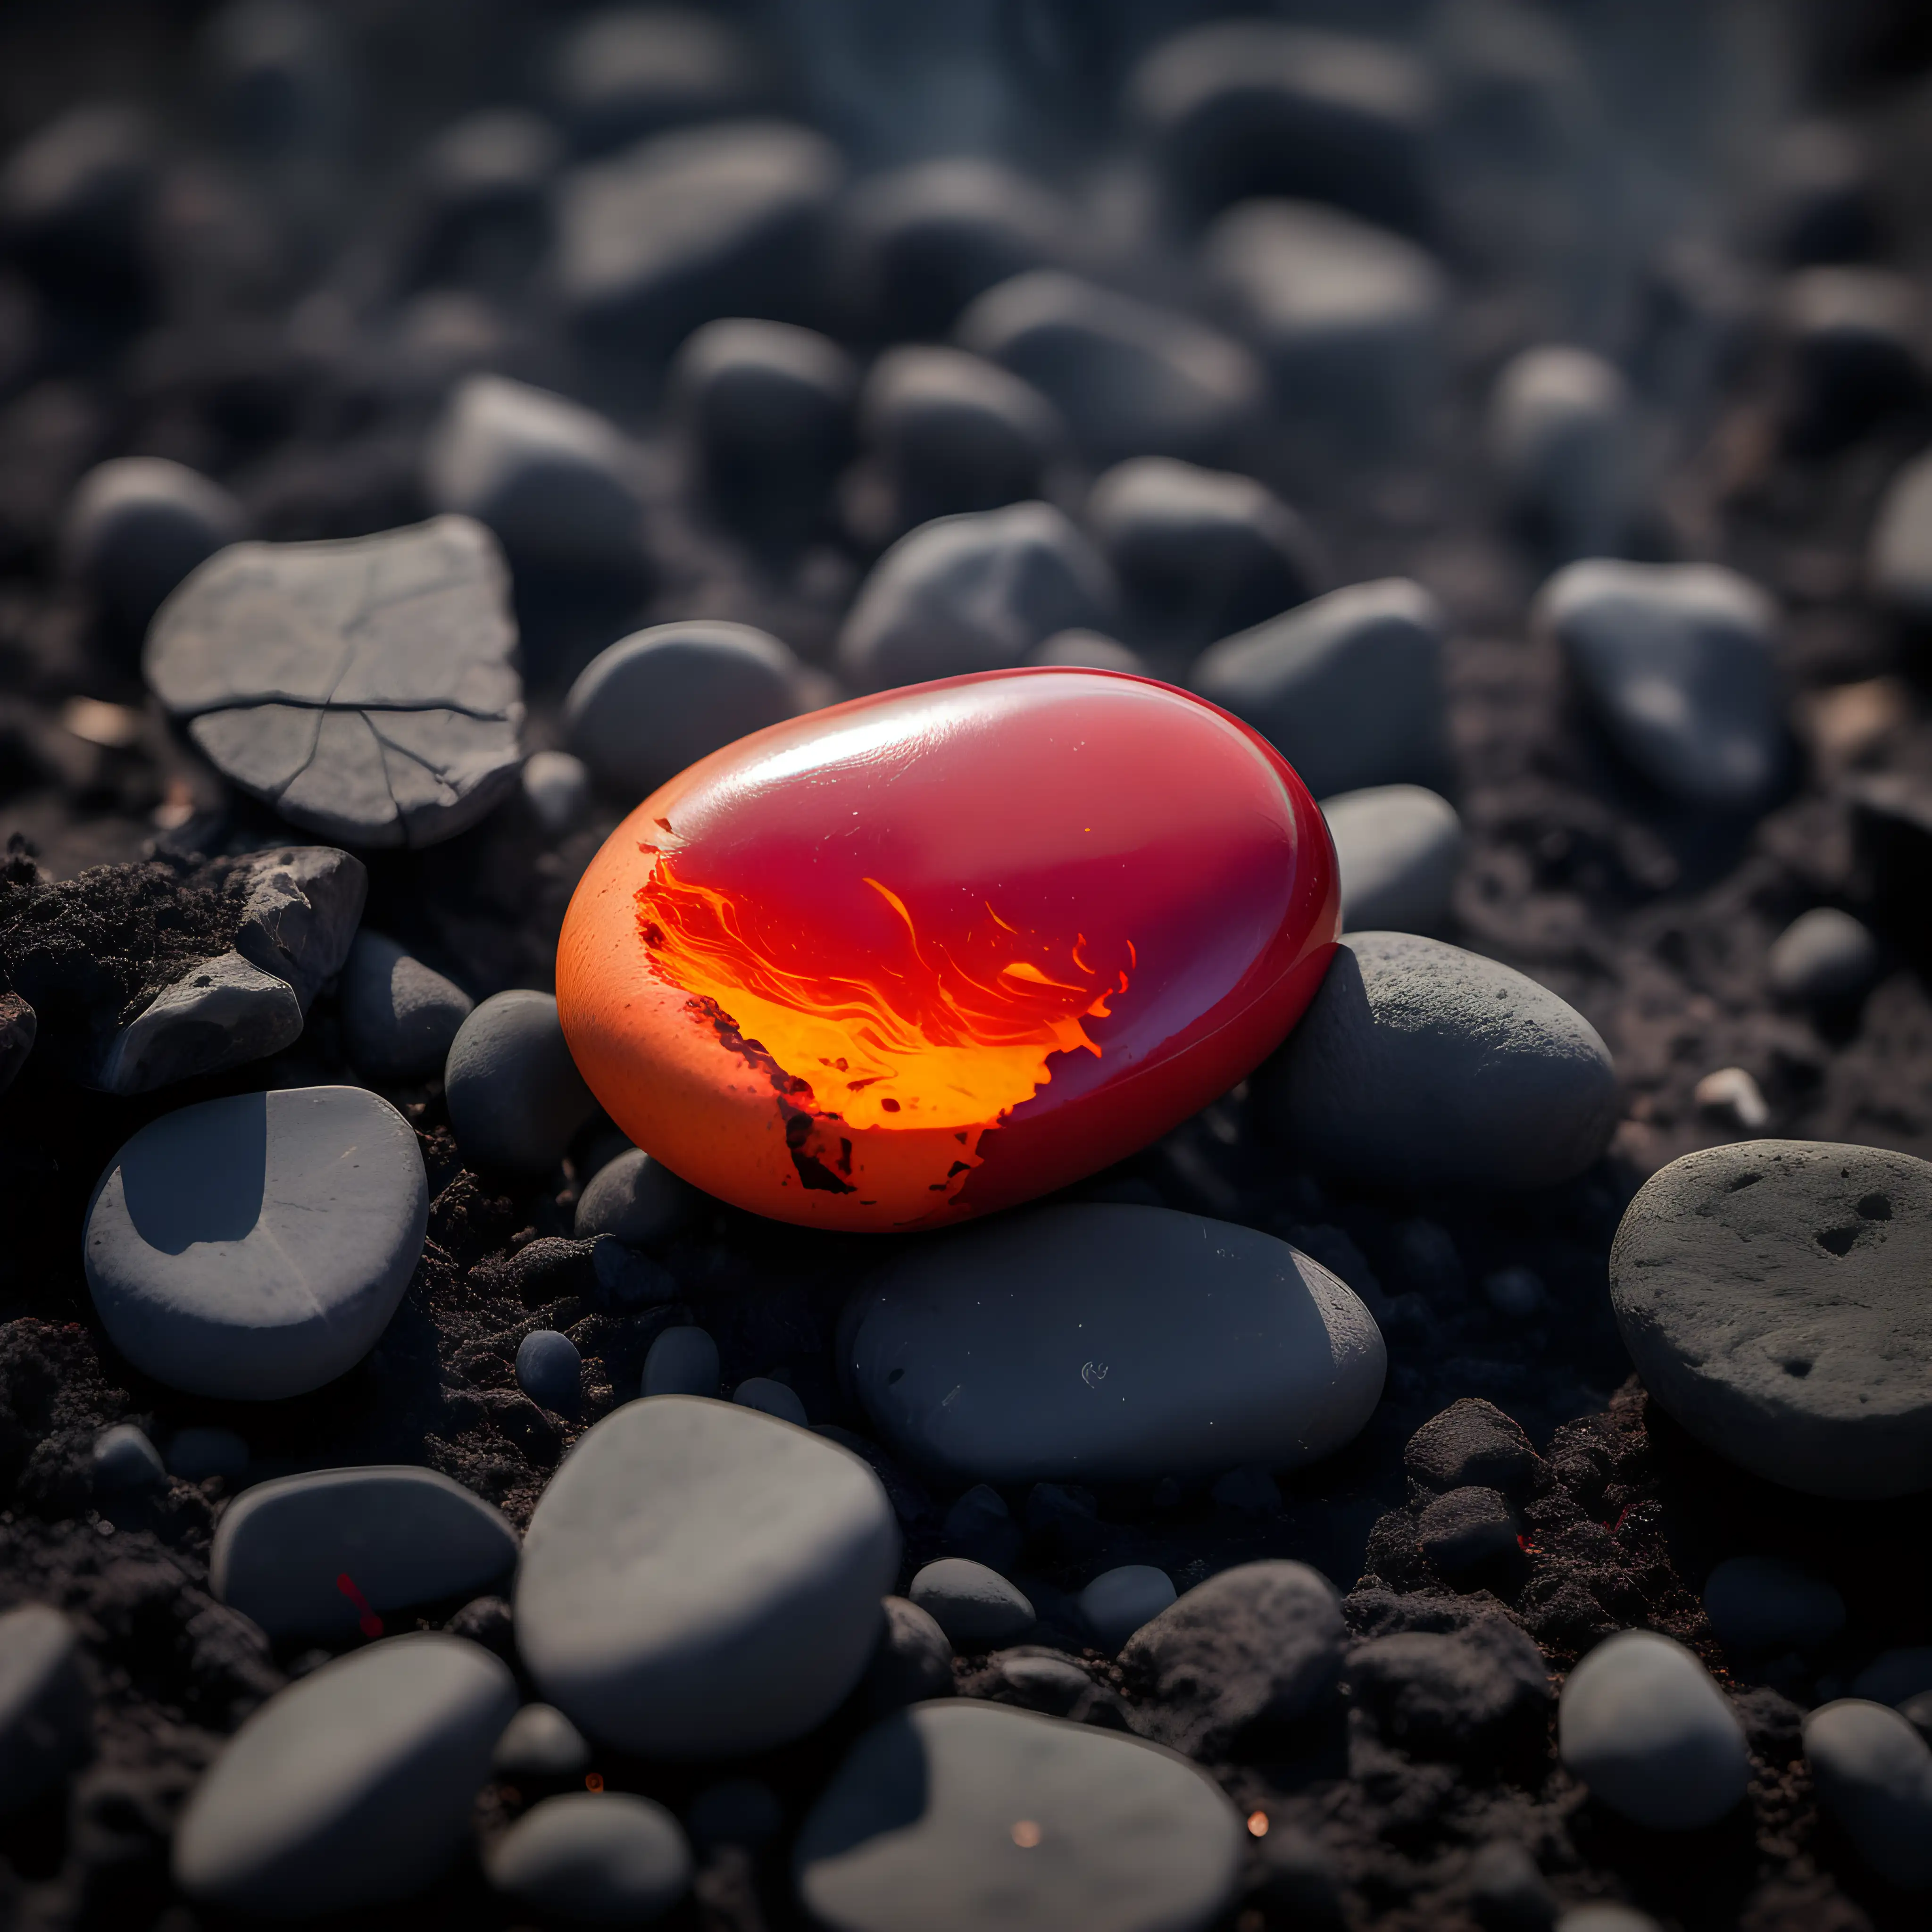 A crimson and orange pebble lying in a smoldering, fiery field